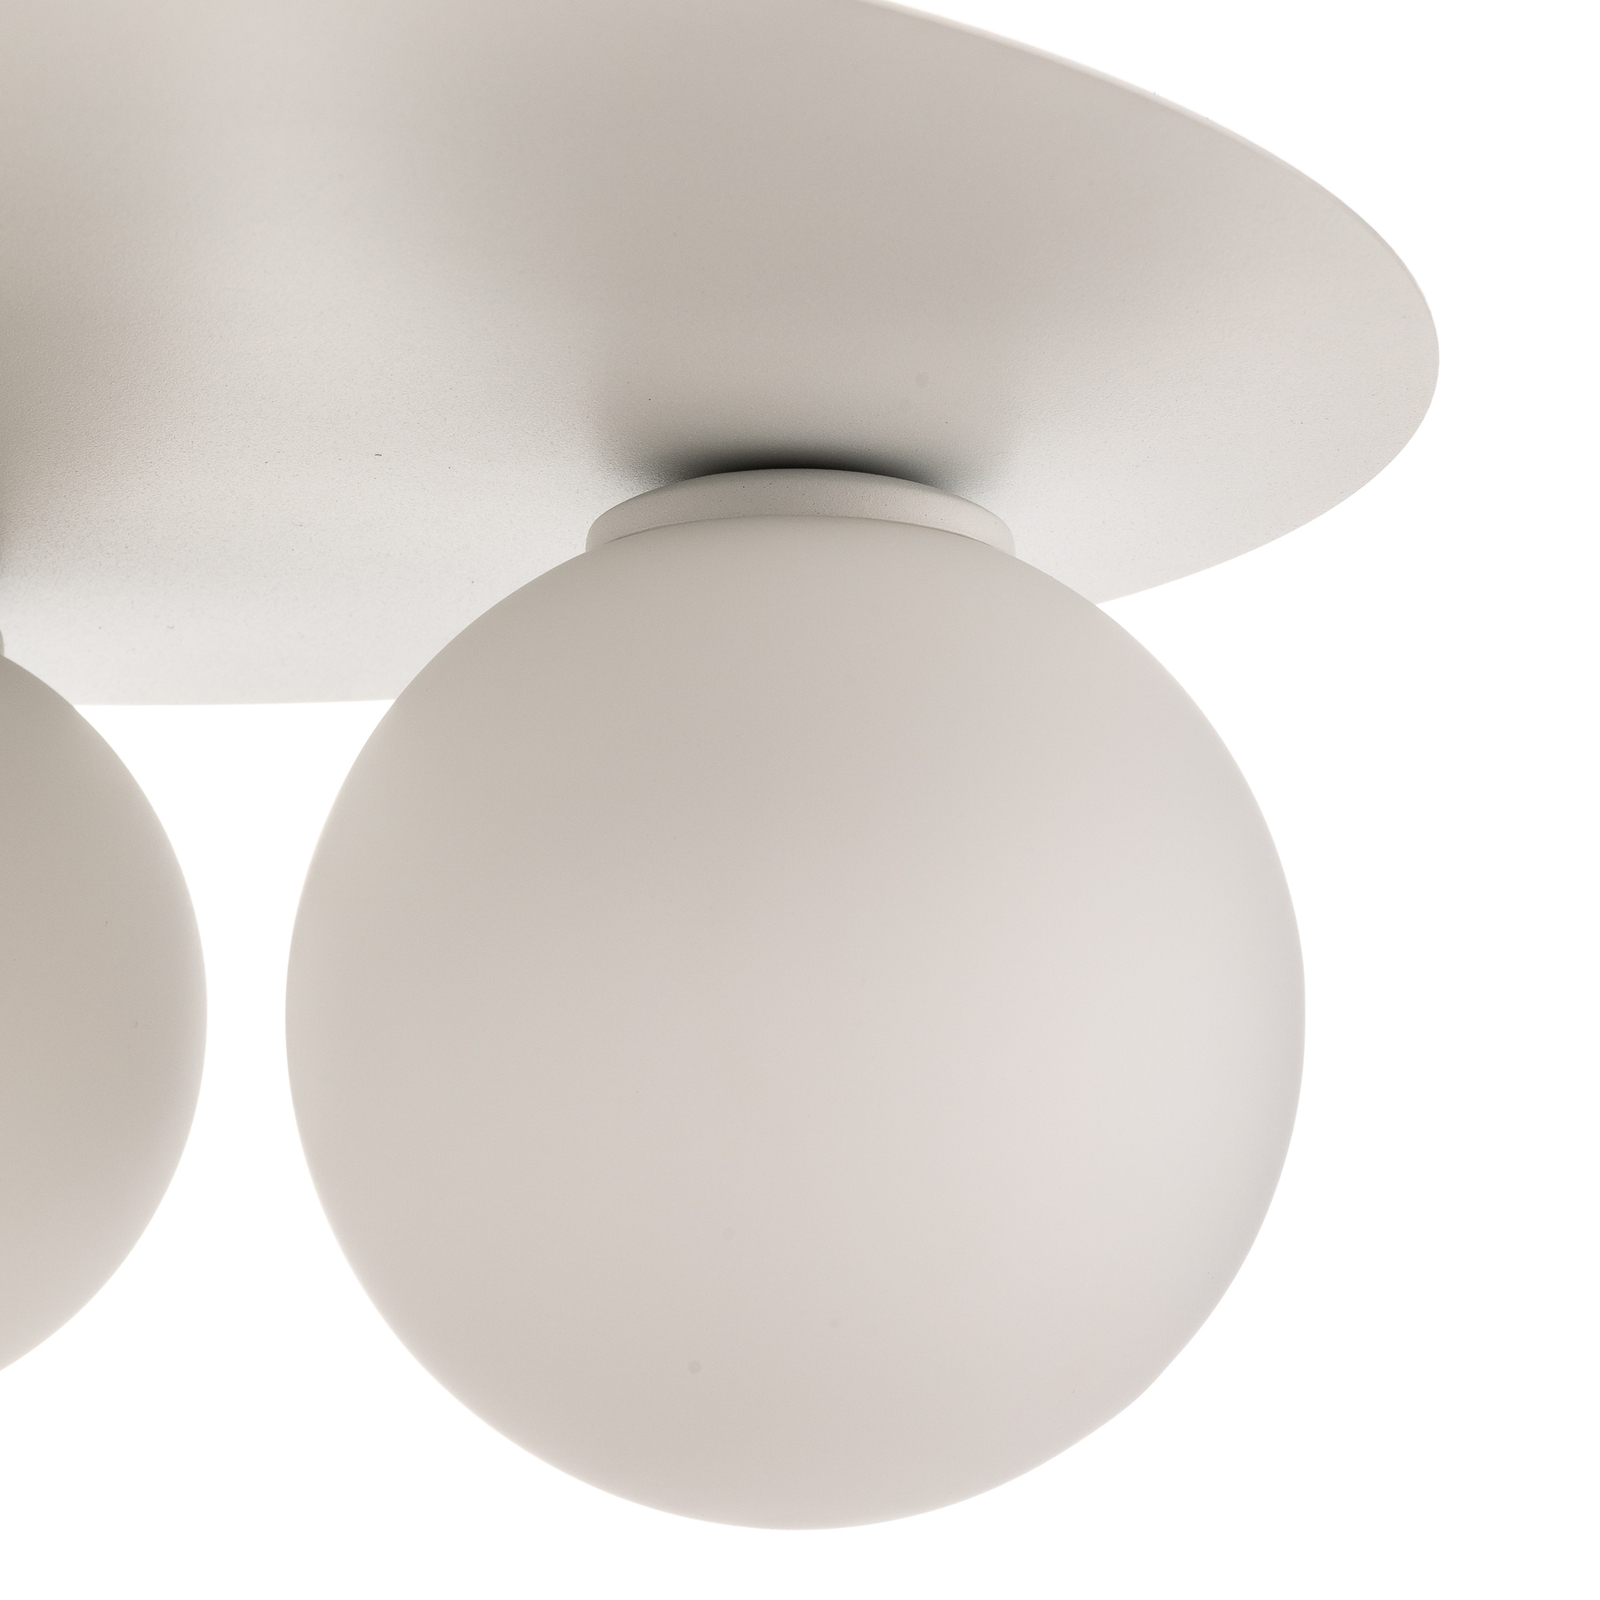 Firn ceiling light, round, 3-bulb, white